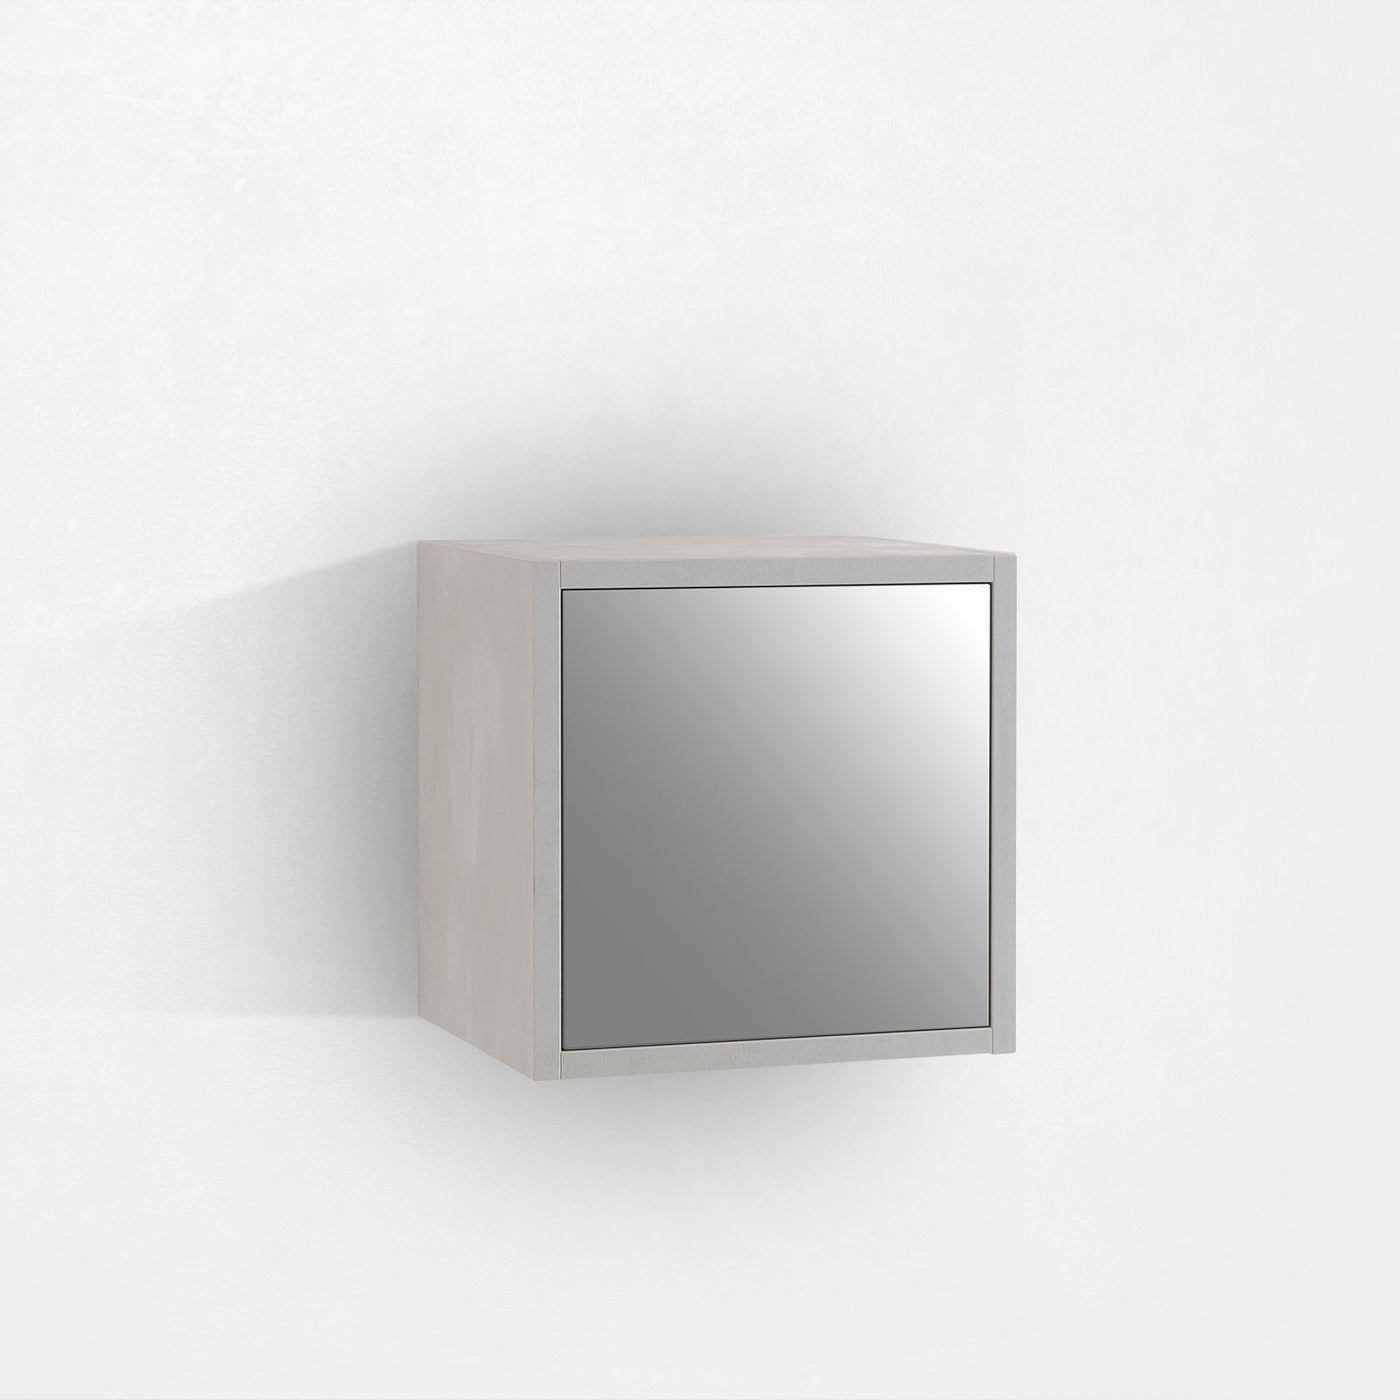 1 door wall unit w/mirror OSLO stone white